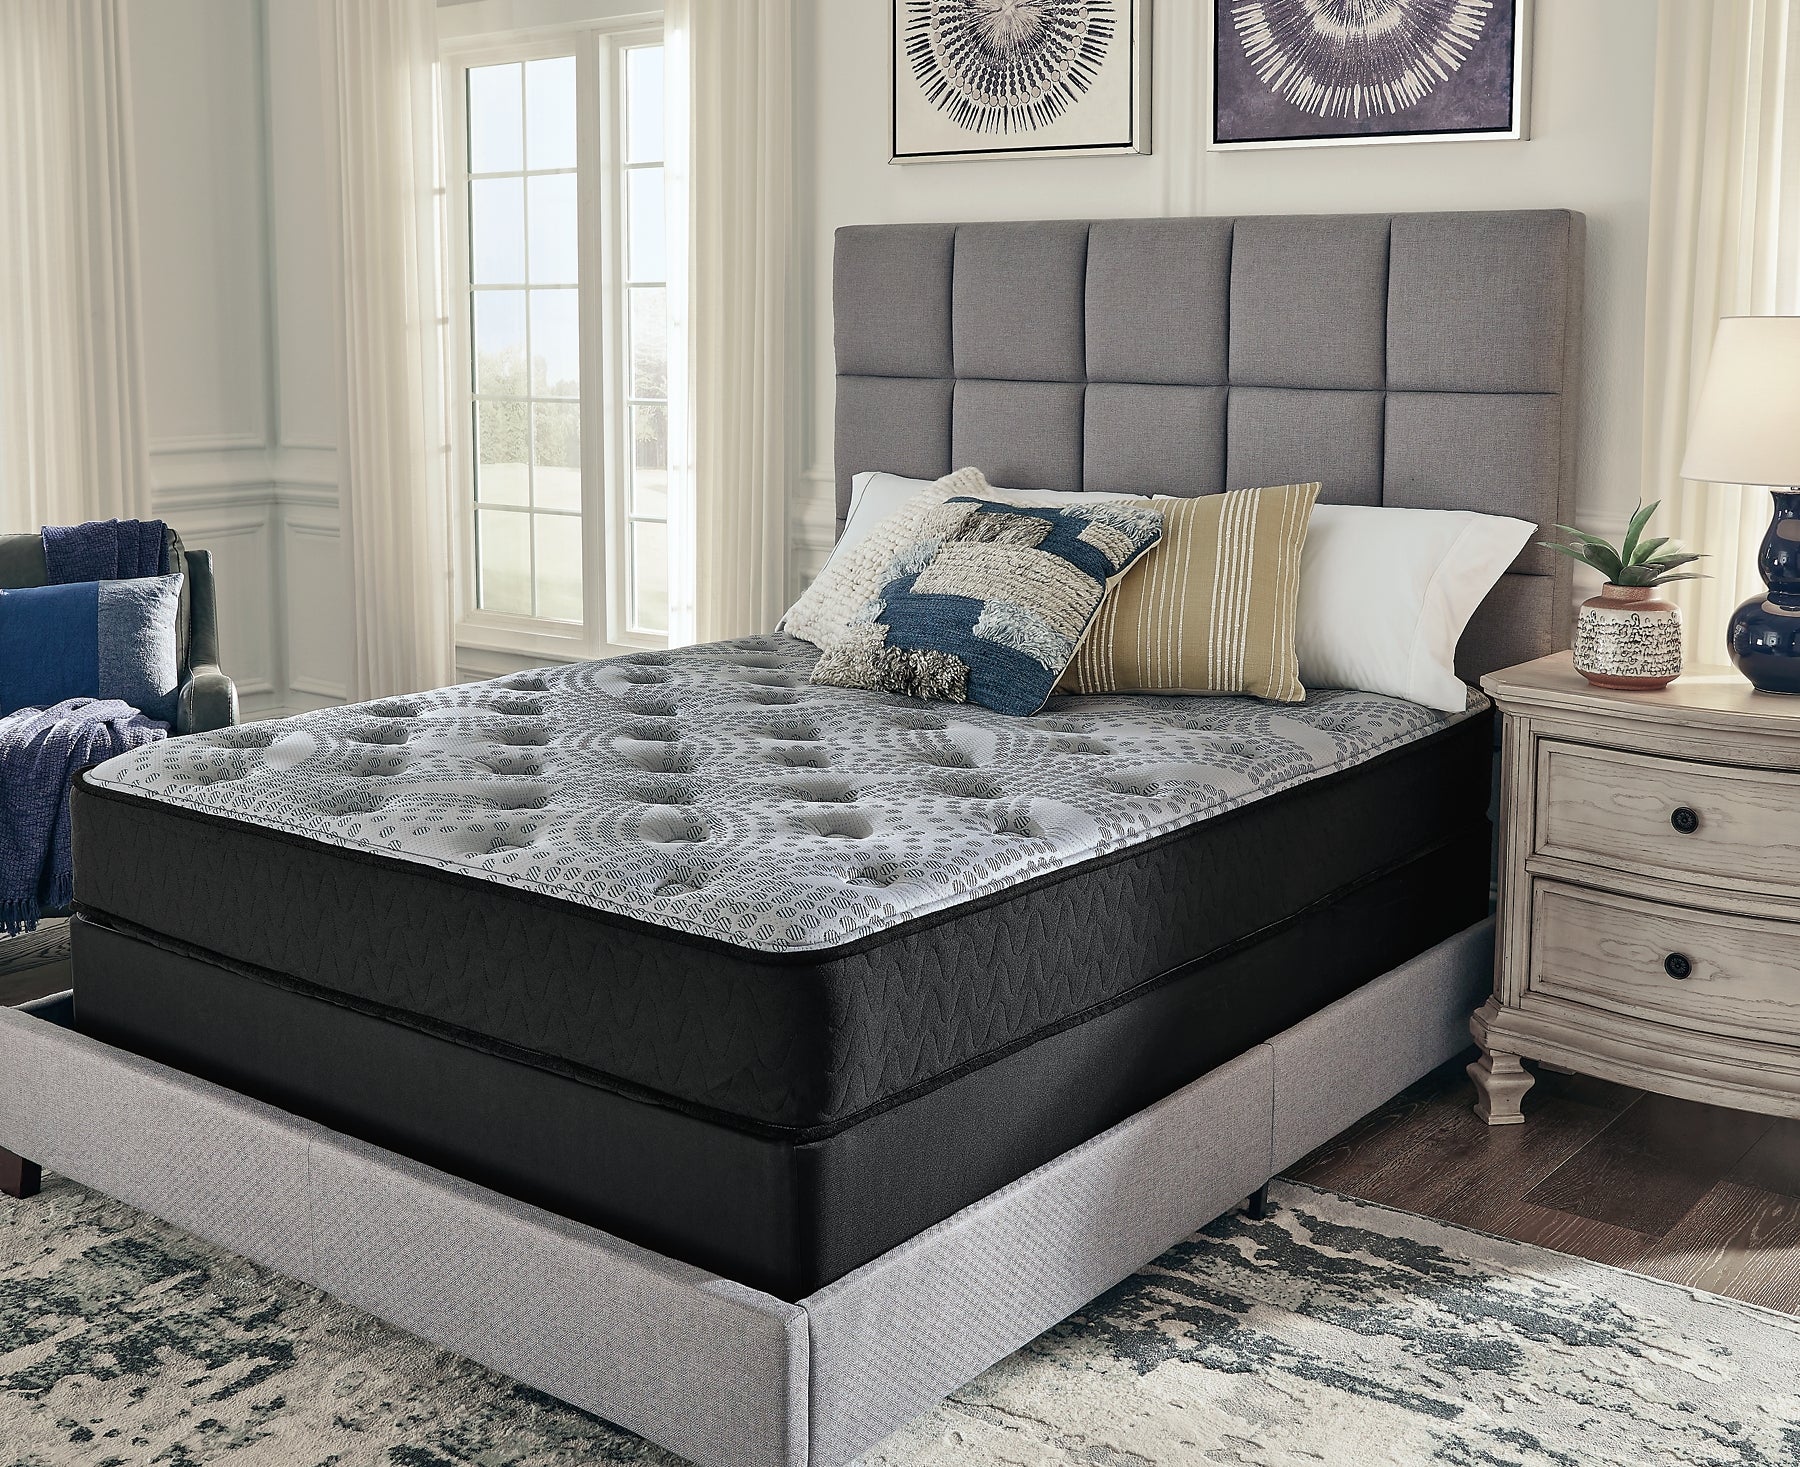 Comfort Plus Queen Mattress Sierra Sleep® by Ashley